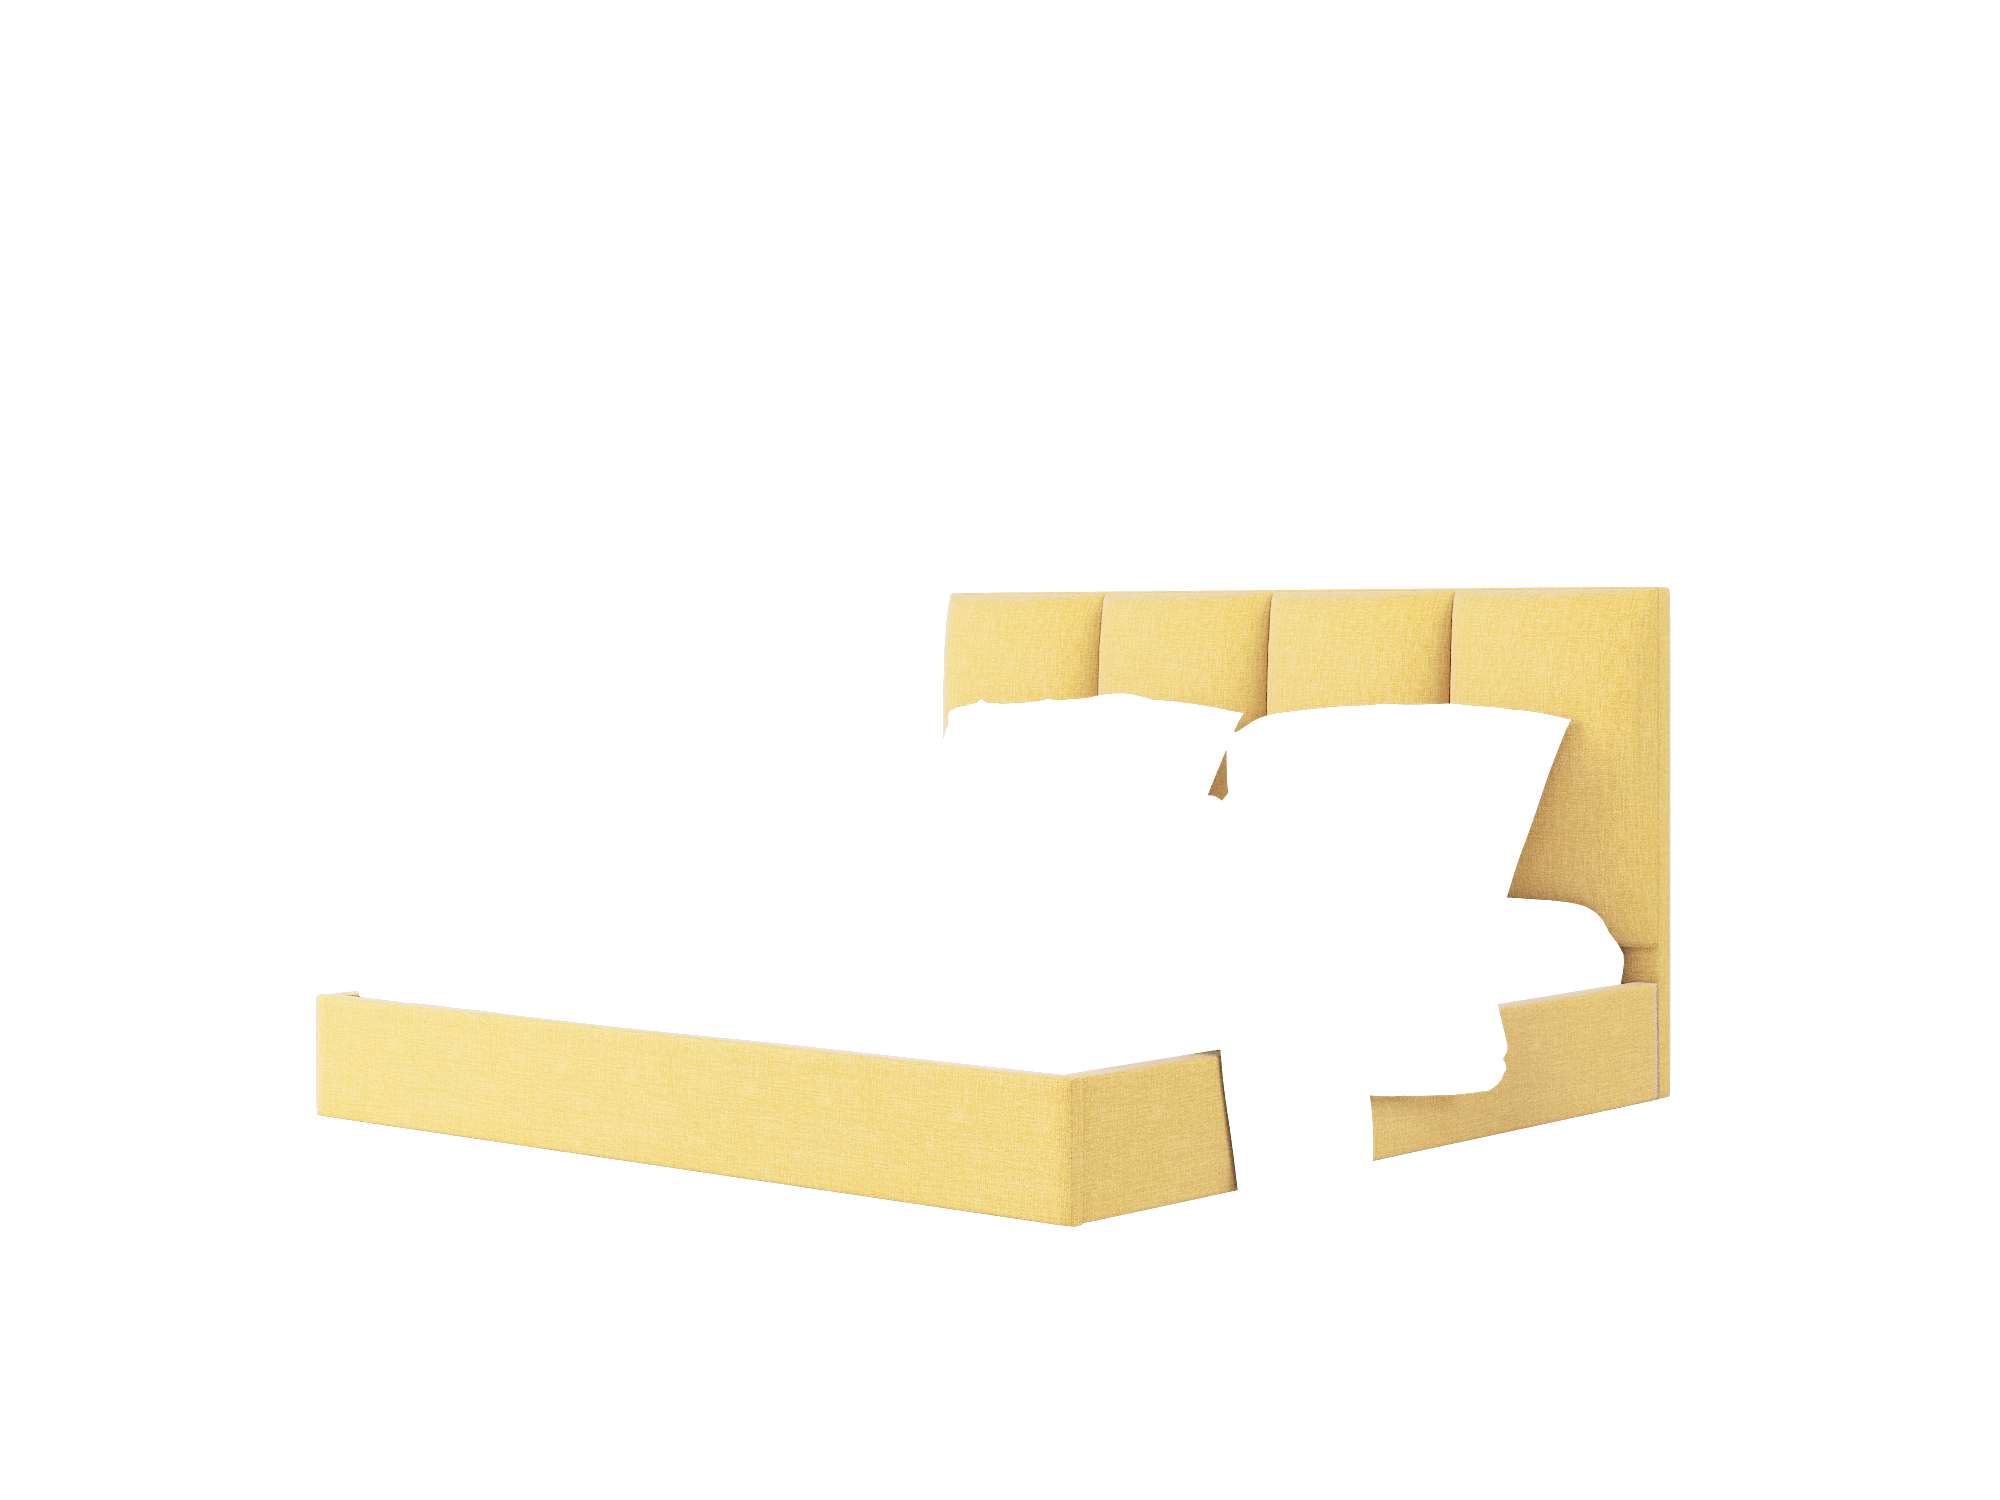 Celine Insight Citronella Bed King Room Texture